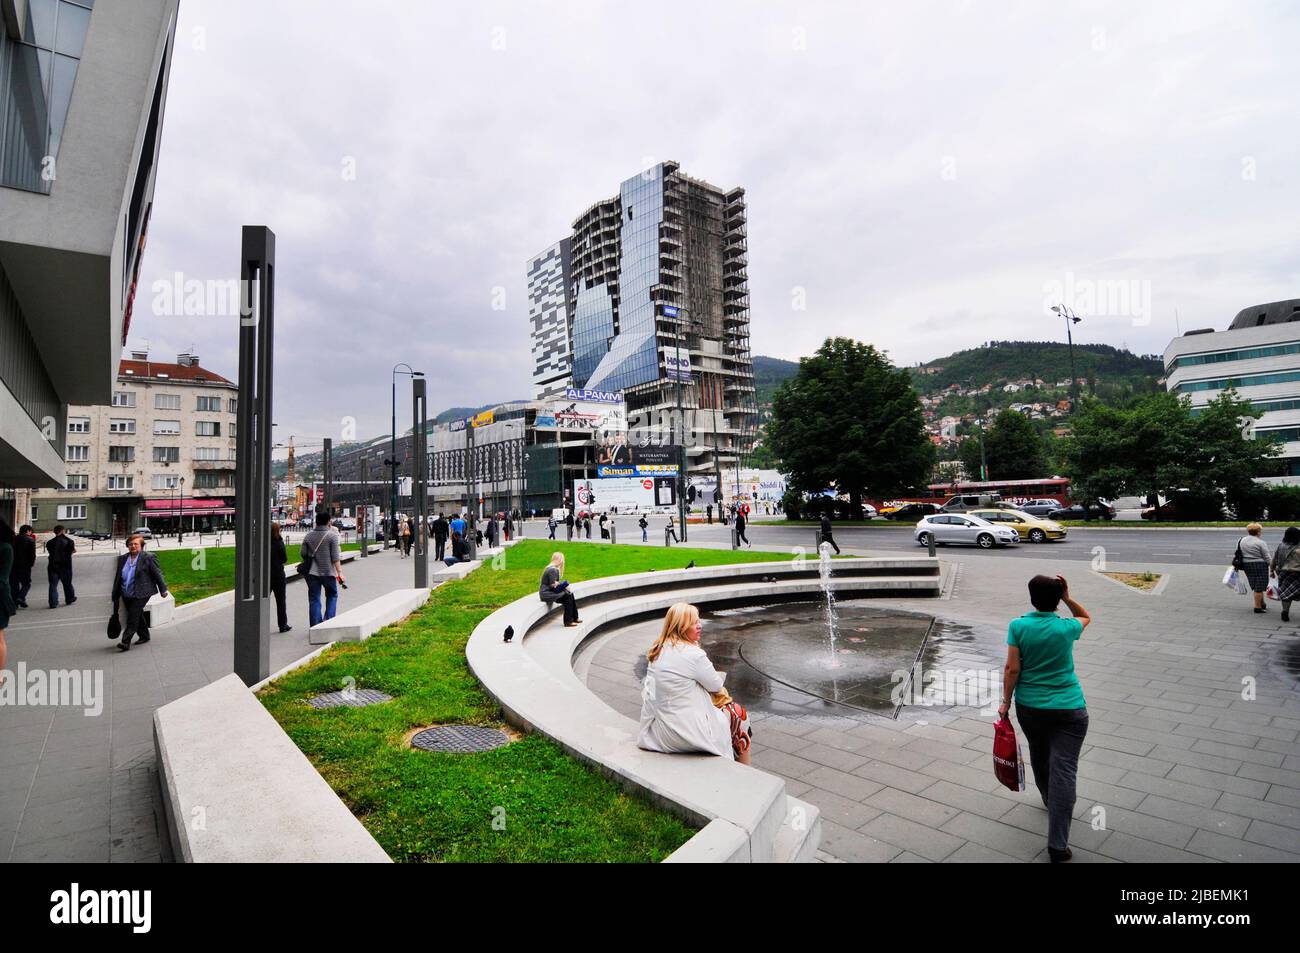 The SCC - Sarajevo City Center shopping mall under construction. Sarajevo, Bosnia & Herzegovina. Stock Photo